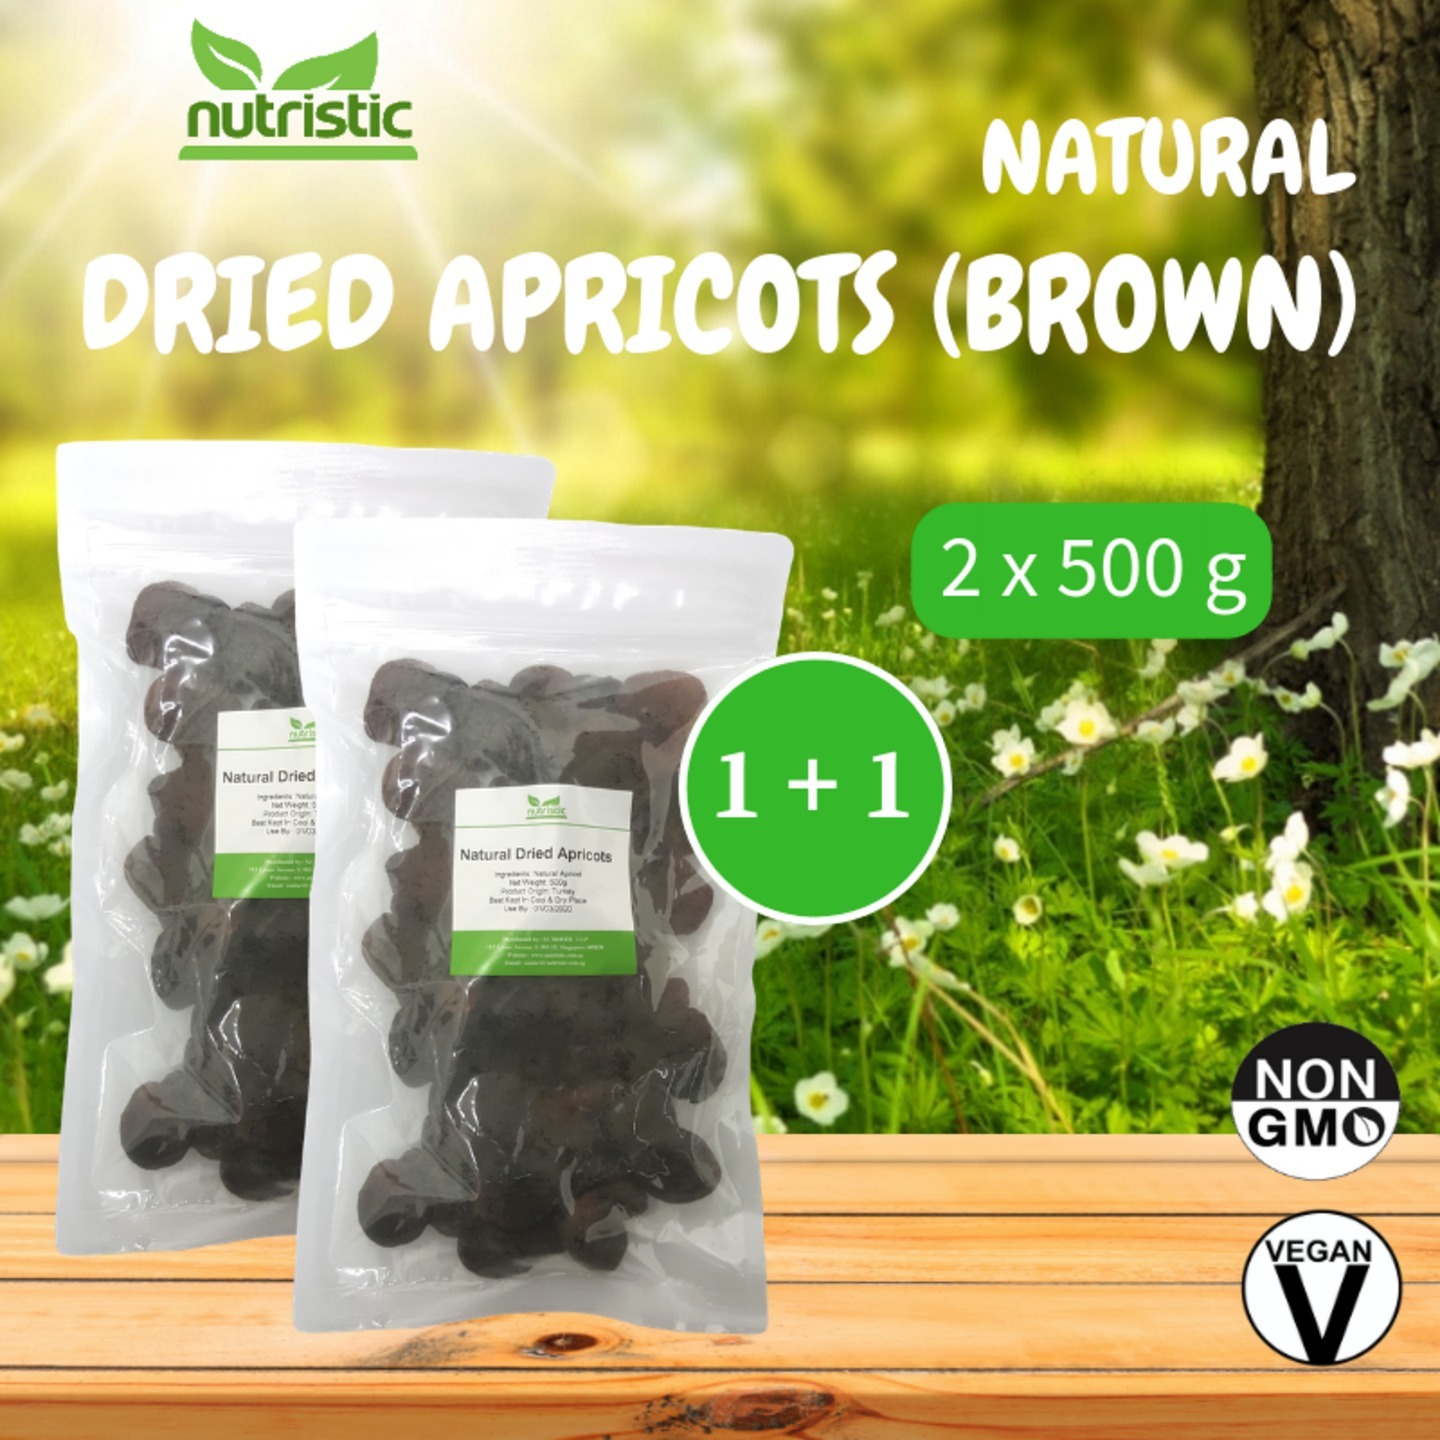 Natural Dried Apricots 500g Brown x2 - Value Bundle 1+1